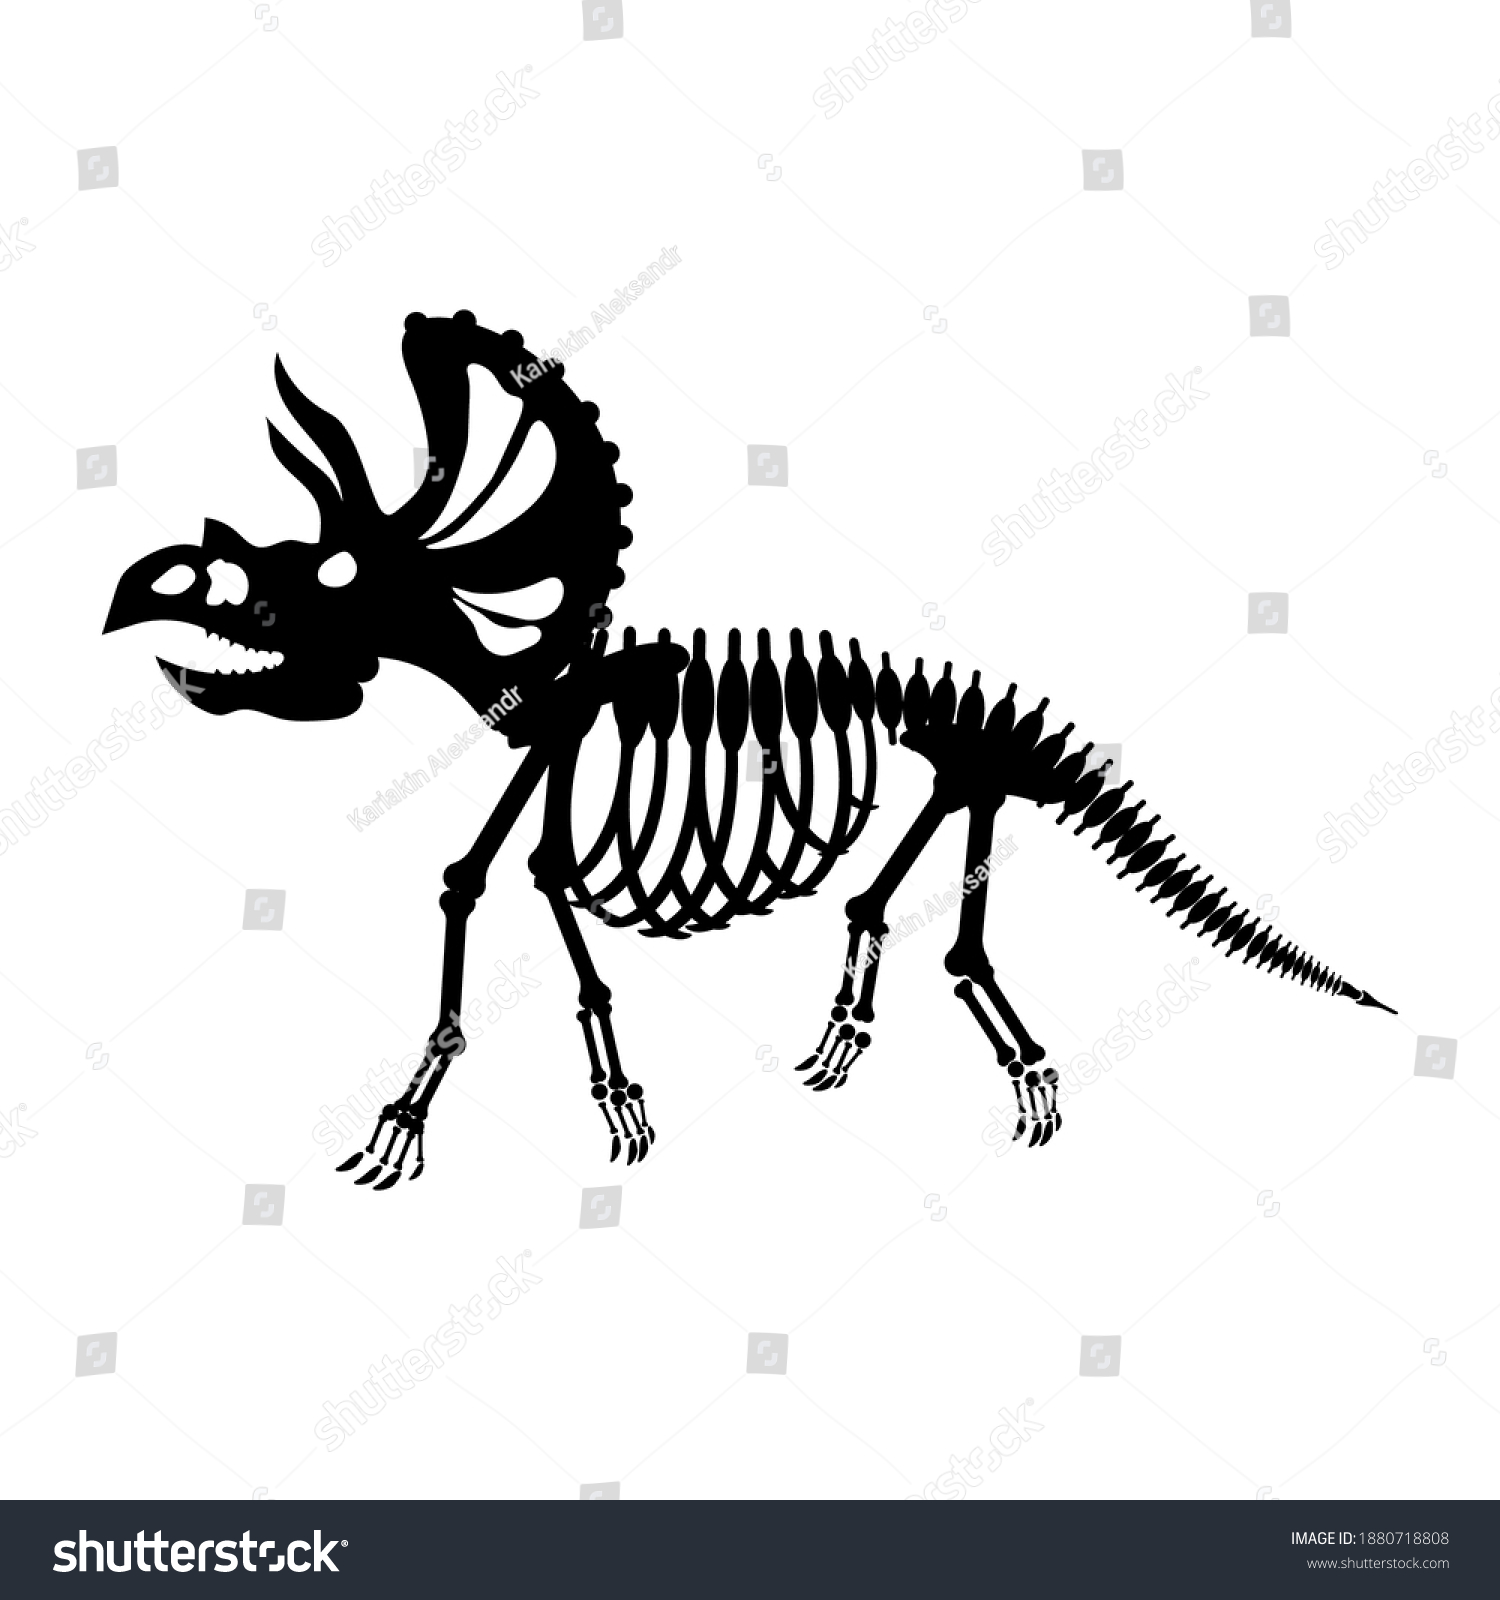 Triceratops Skeleton Silhouette Vector Illustration Vetor Stock Livre De Direitos 1880718808 